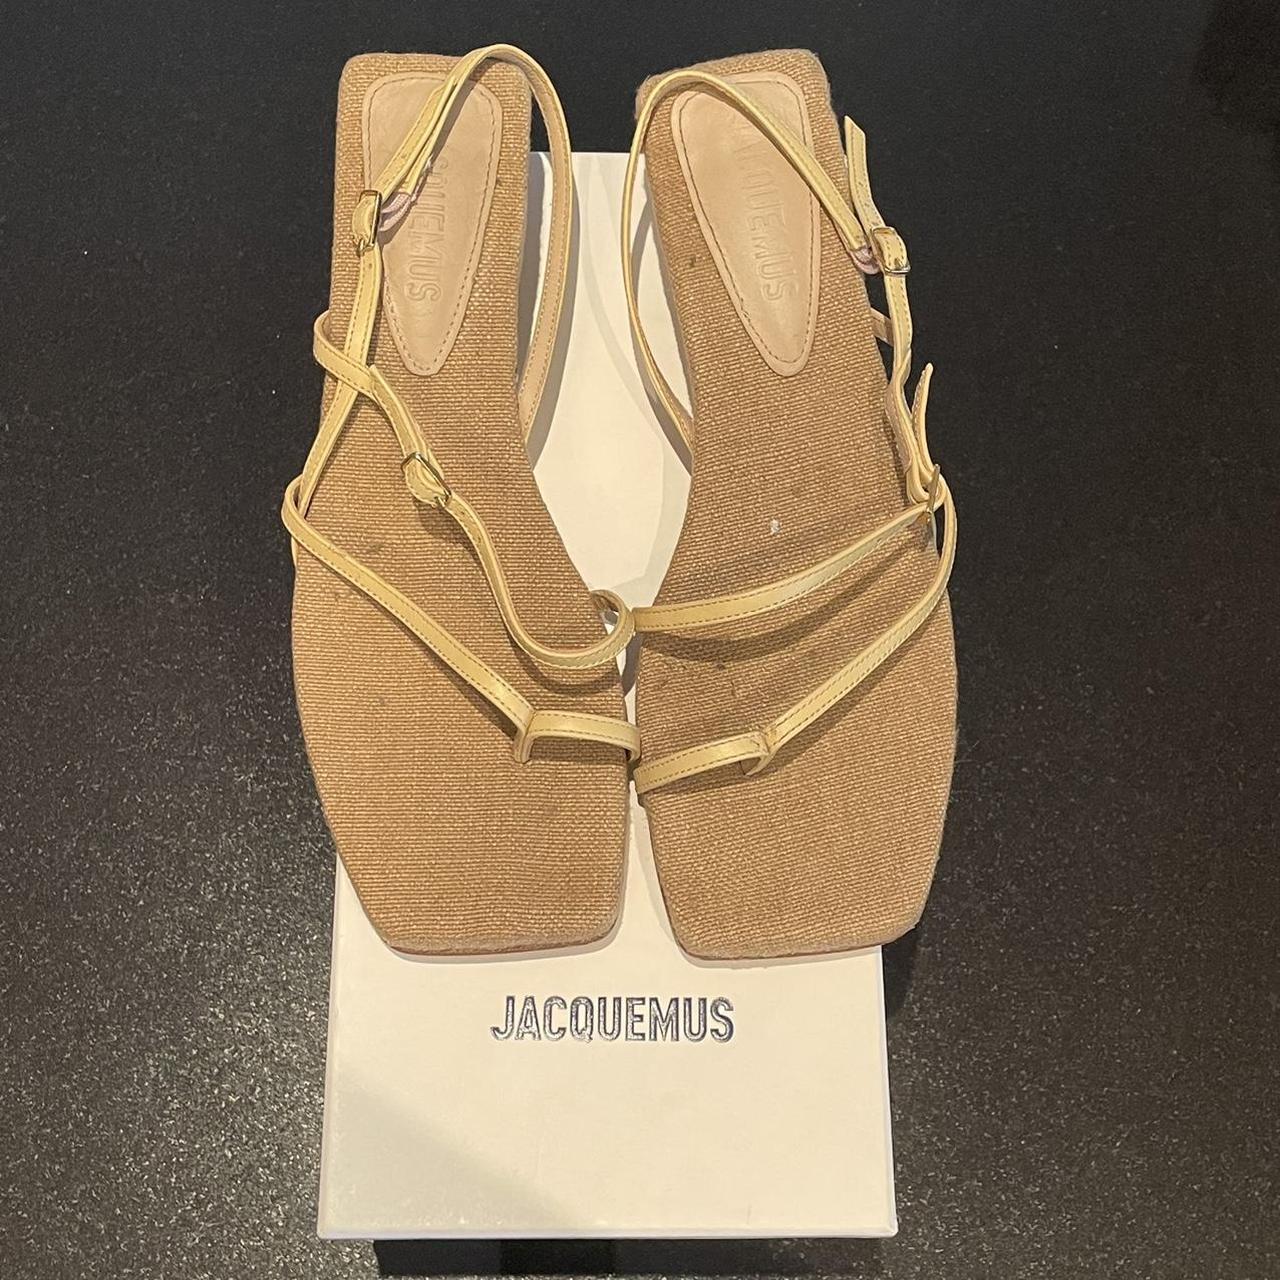 Jacquemus Women's Sandals